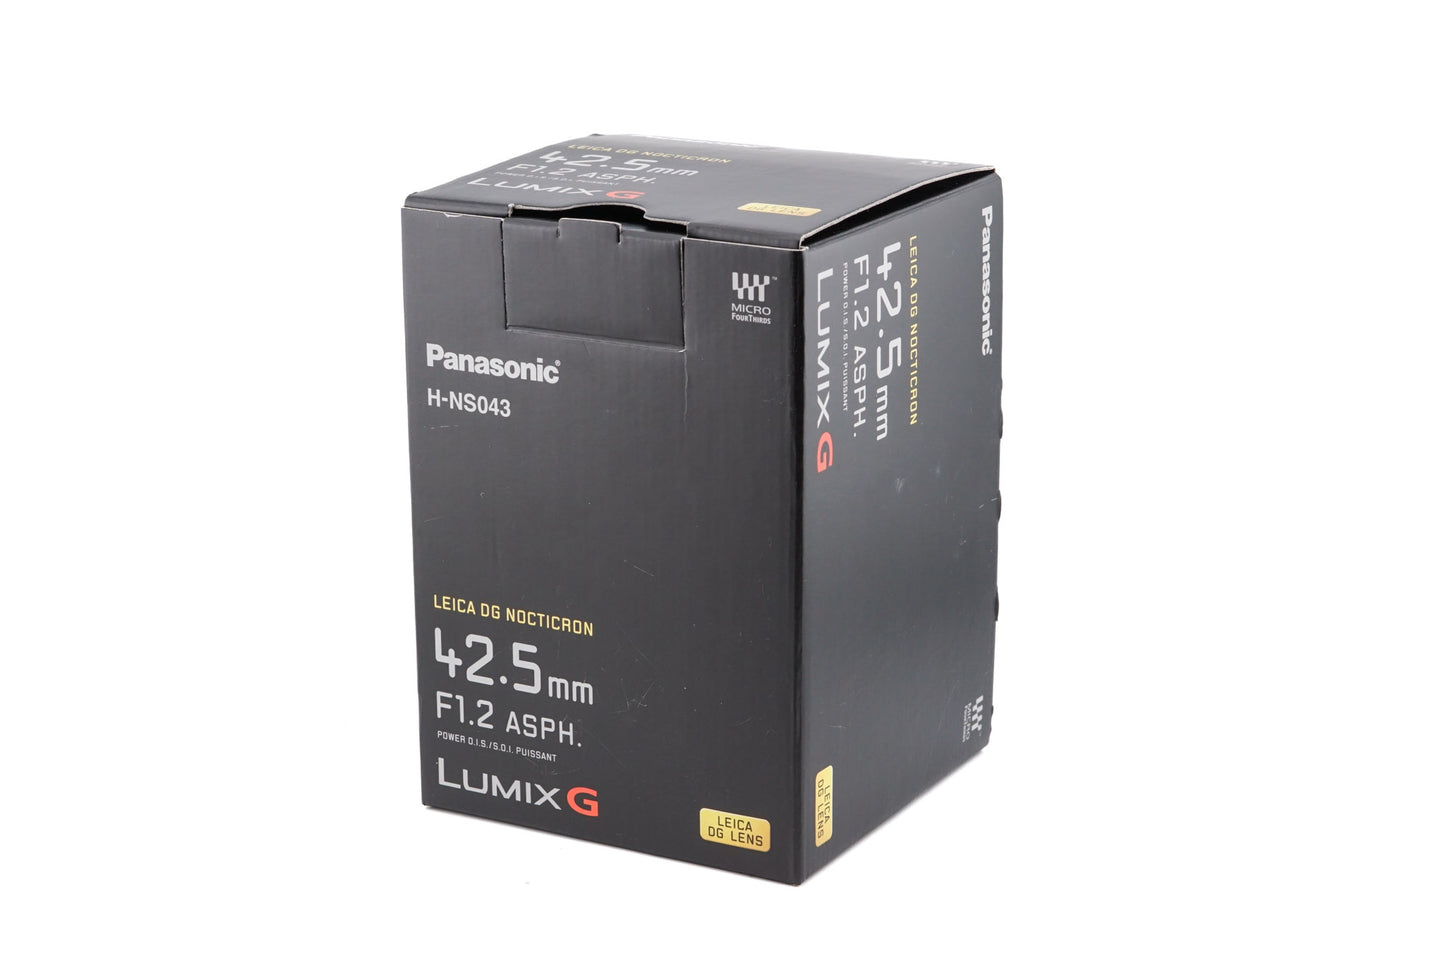 Panasonic 42.5mm f1.2 G DG Nocticron ASPH. Power O.I.S.